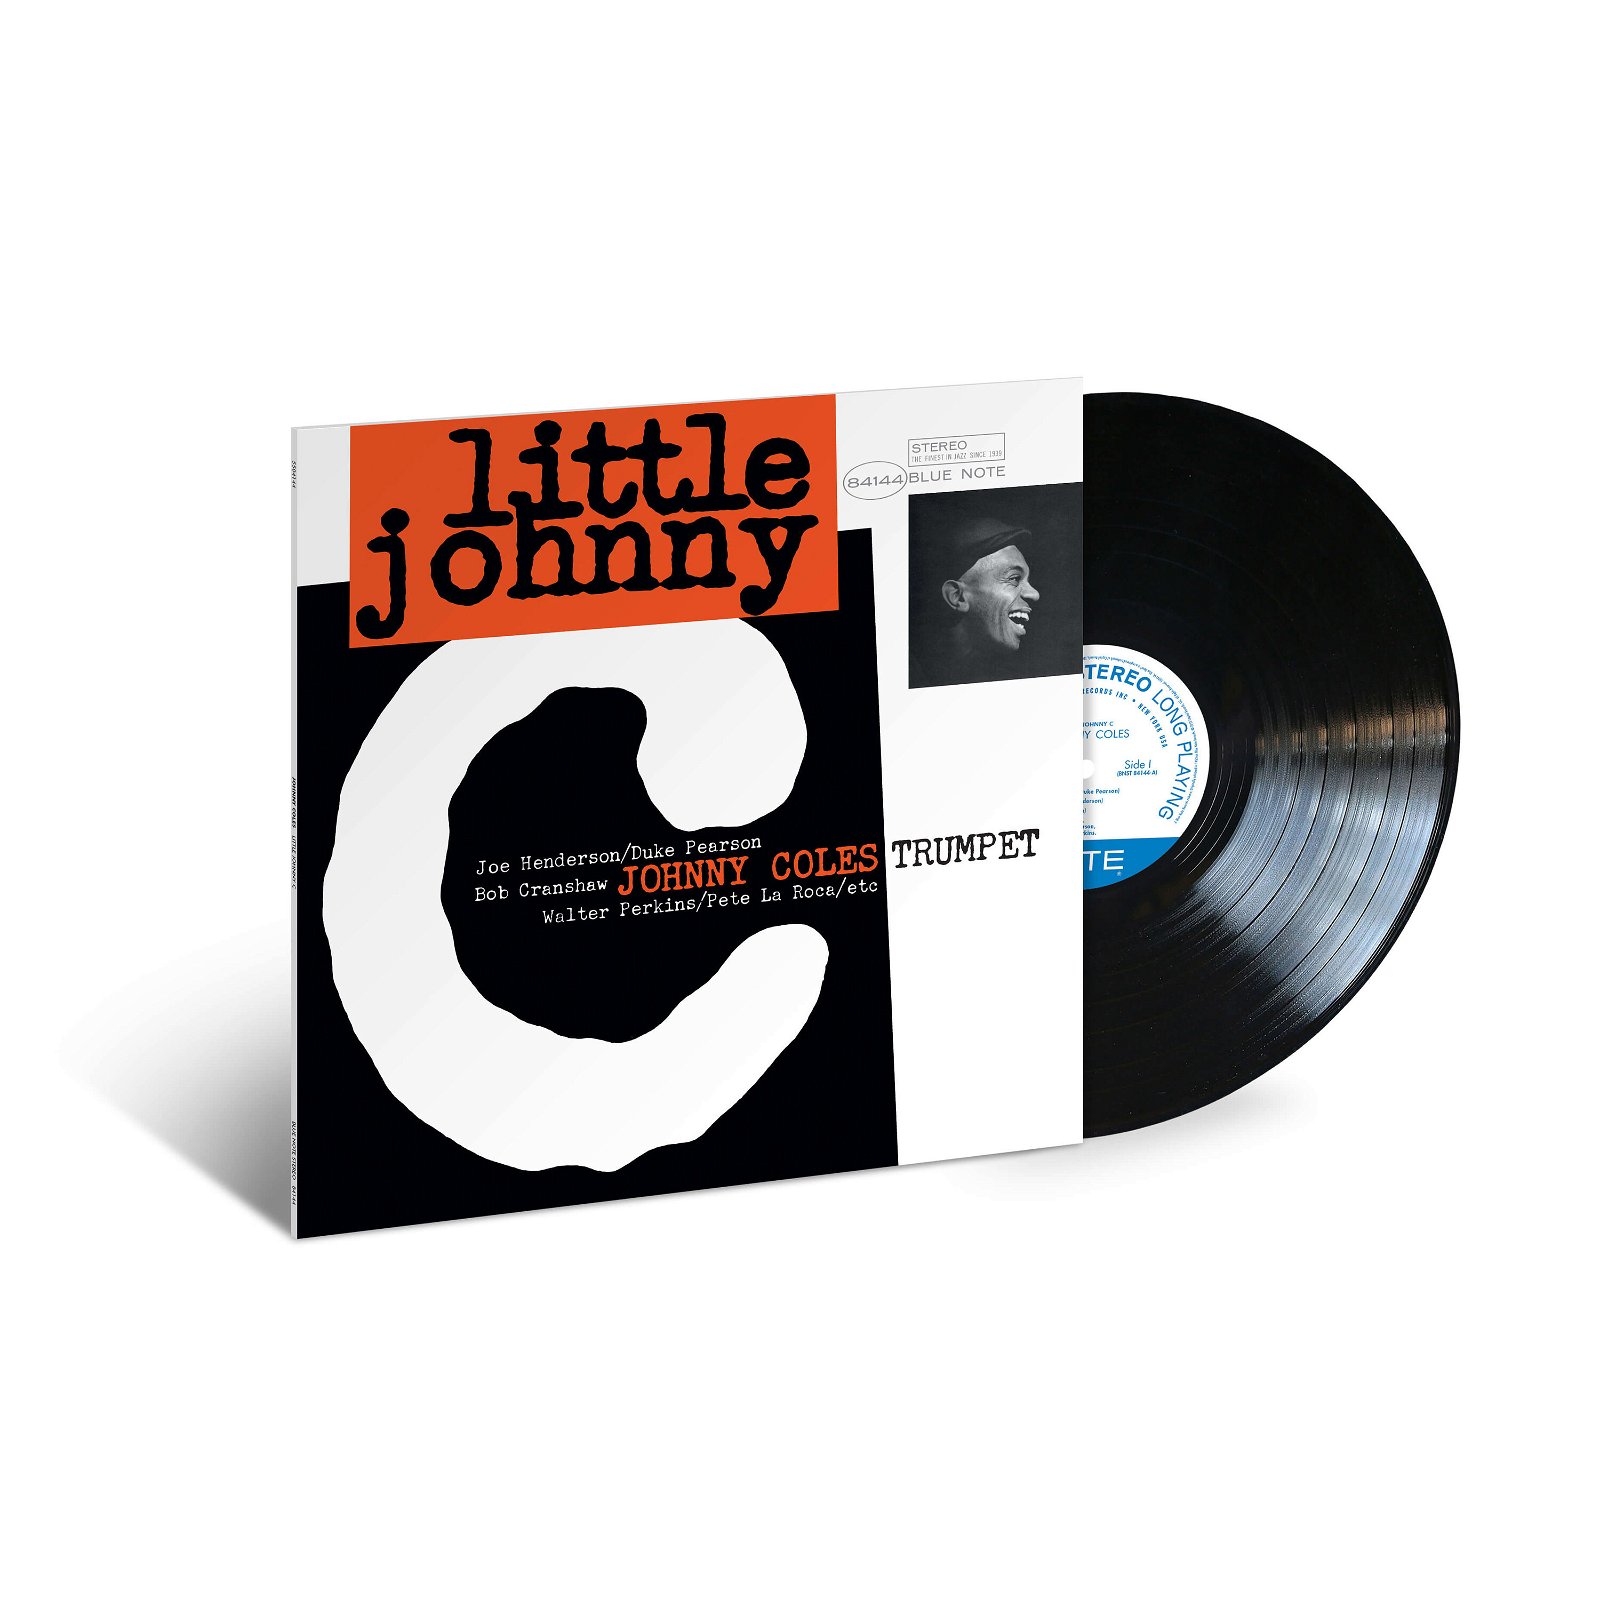 CD Shop - COLES, JOHNNY LITTLE JOHNNY C